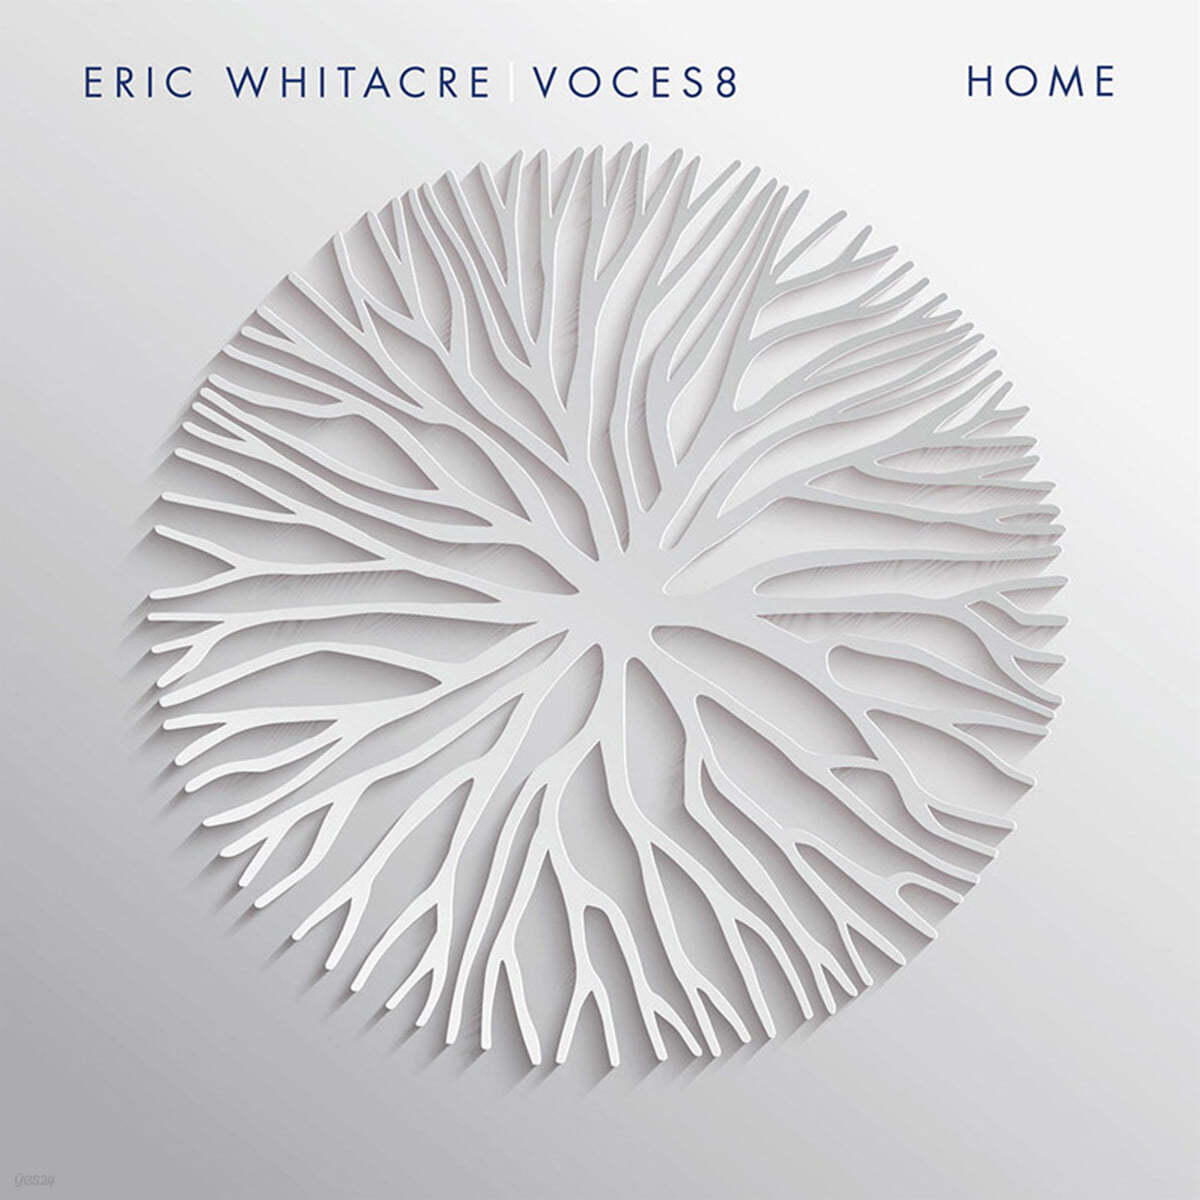 Eric Whitacre 에릭 휘태커 & 보컬 앙상블 보체스8의 프로젝트 앨범 (Home)